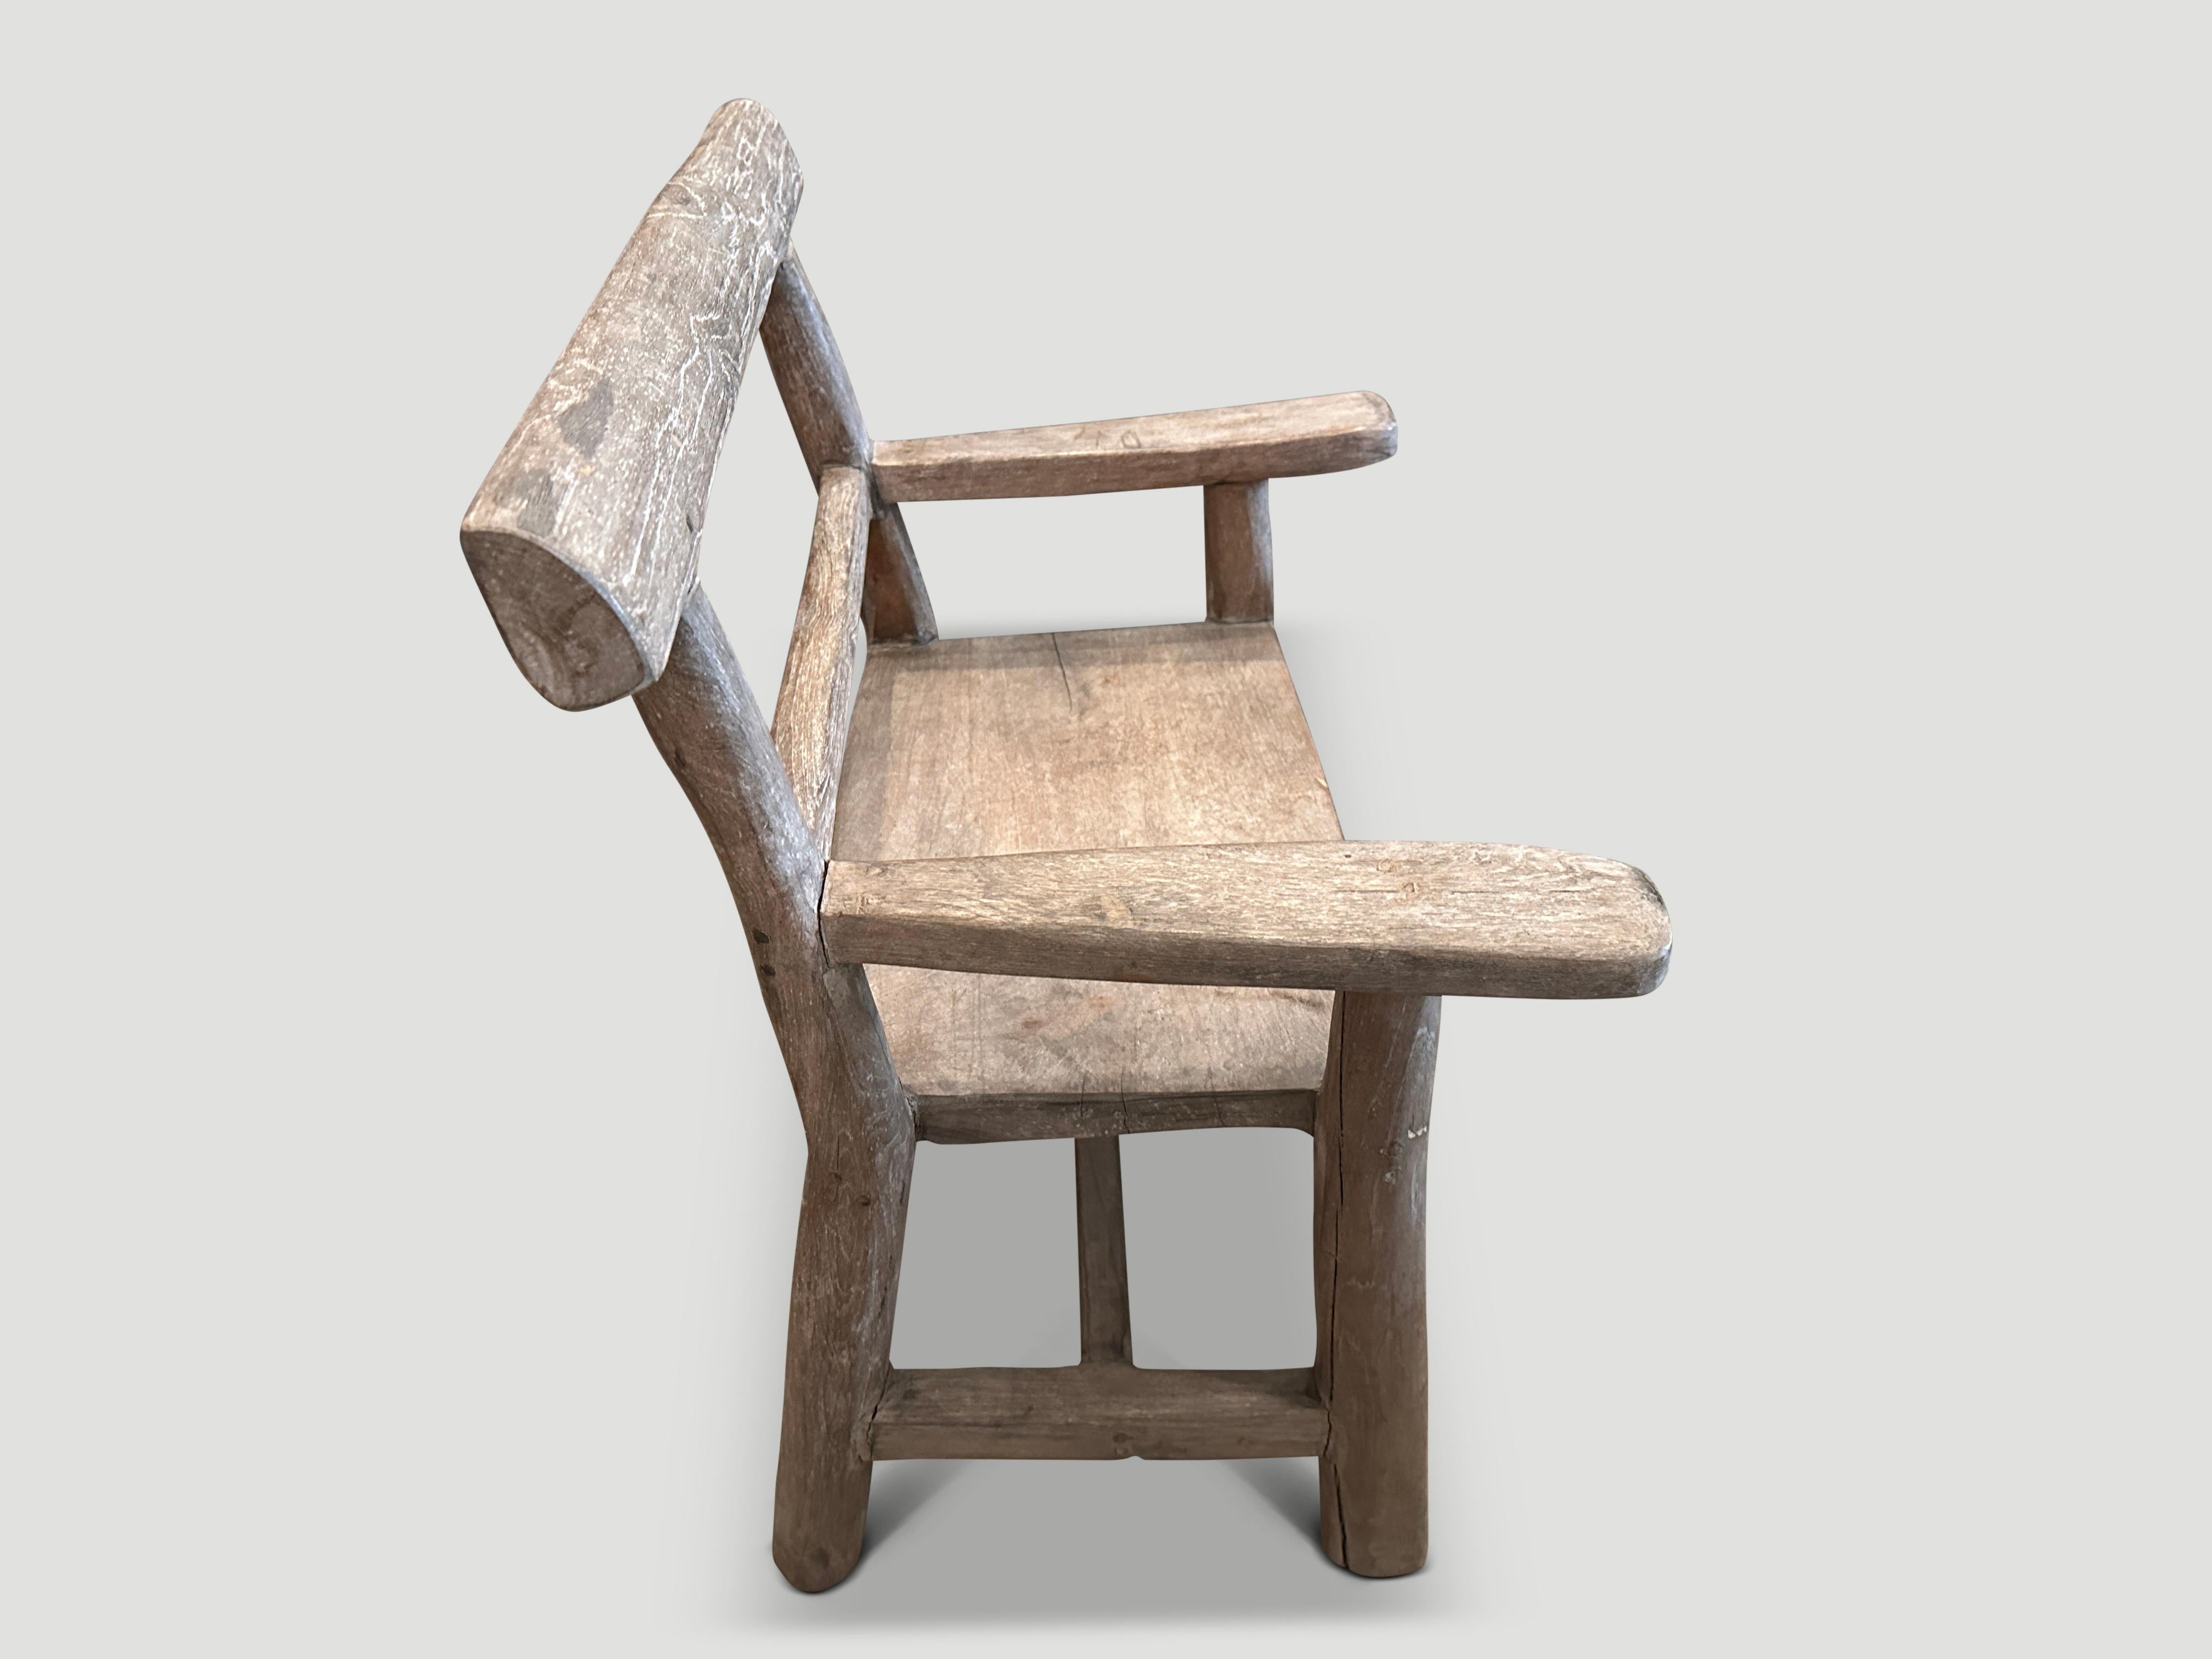 Primitive Andrianna Shamaris Wabi Sabi Aged Teak Wood Chair or Side Table For Sale